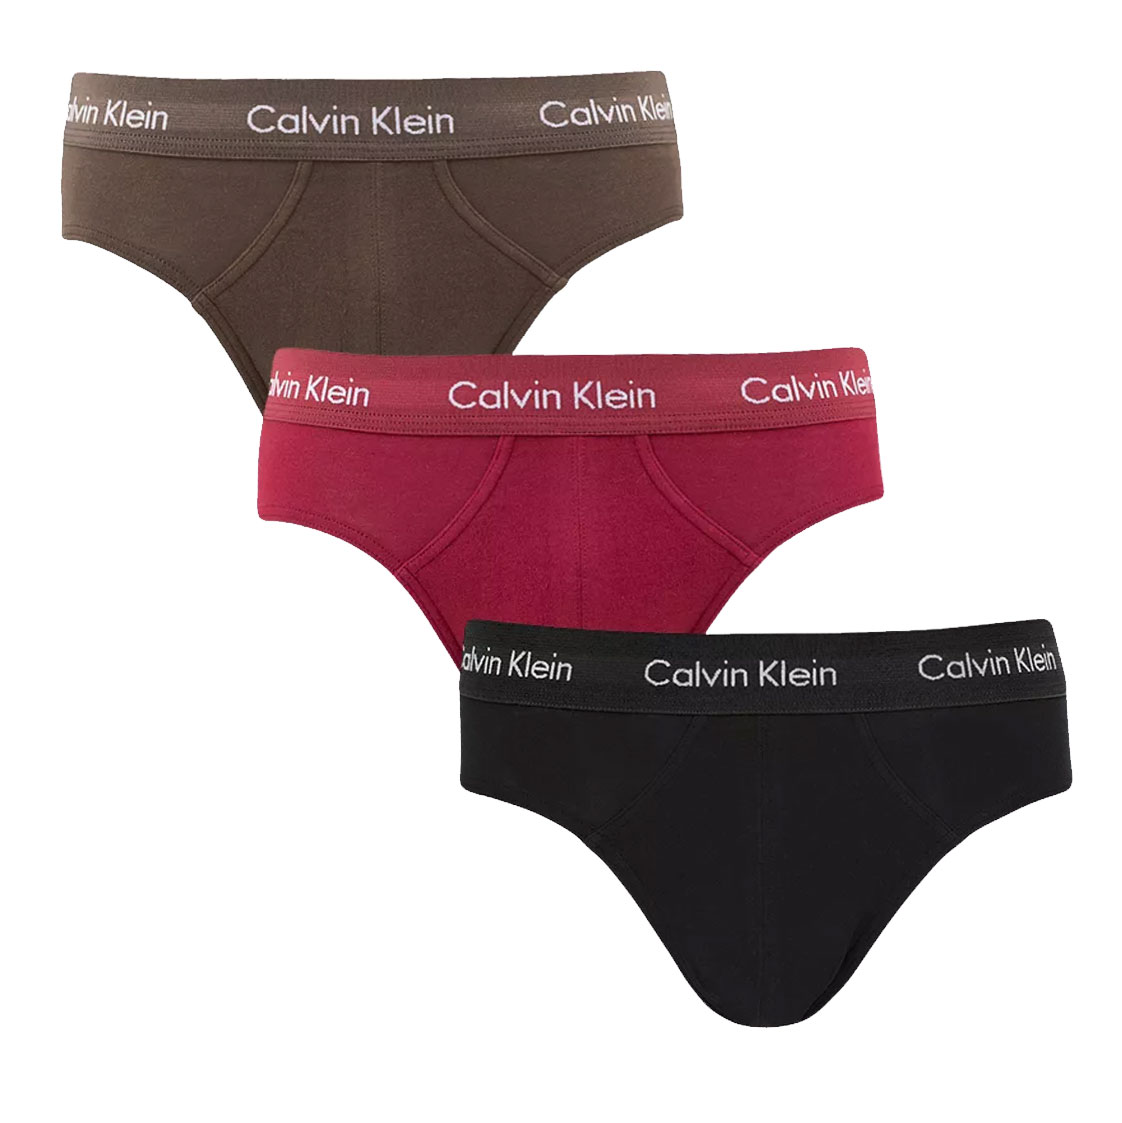 Calvin Klein heup slips 3-pack rood-zwart-bruin